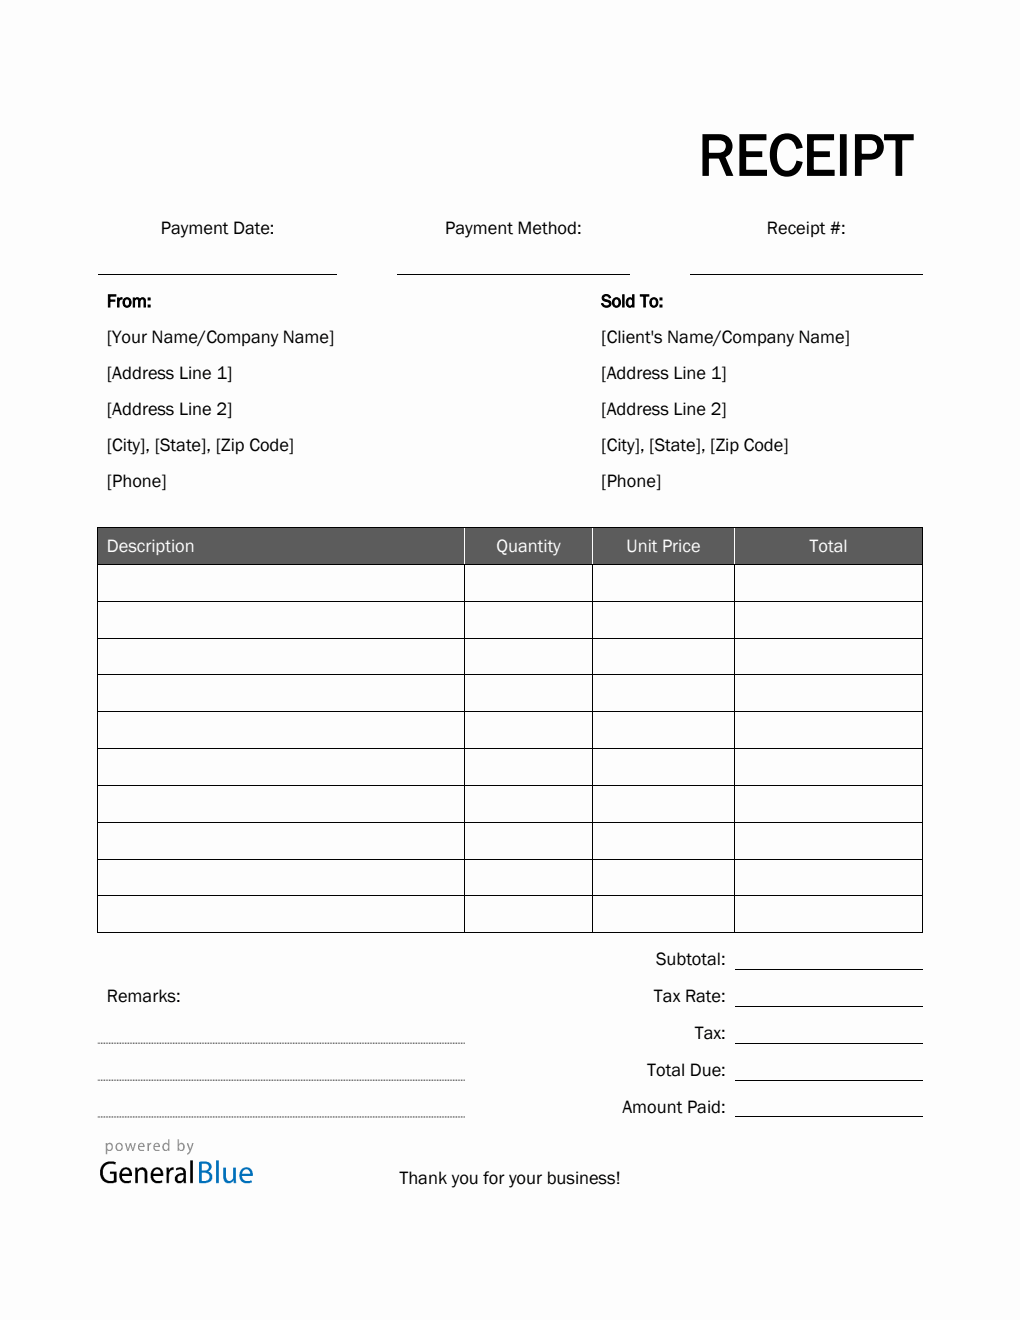 Blank Receipt Template in Word (Basic)